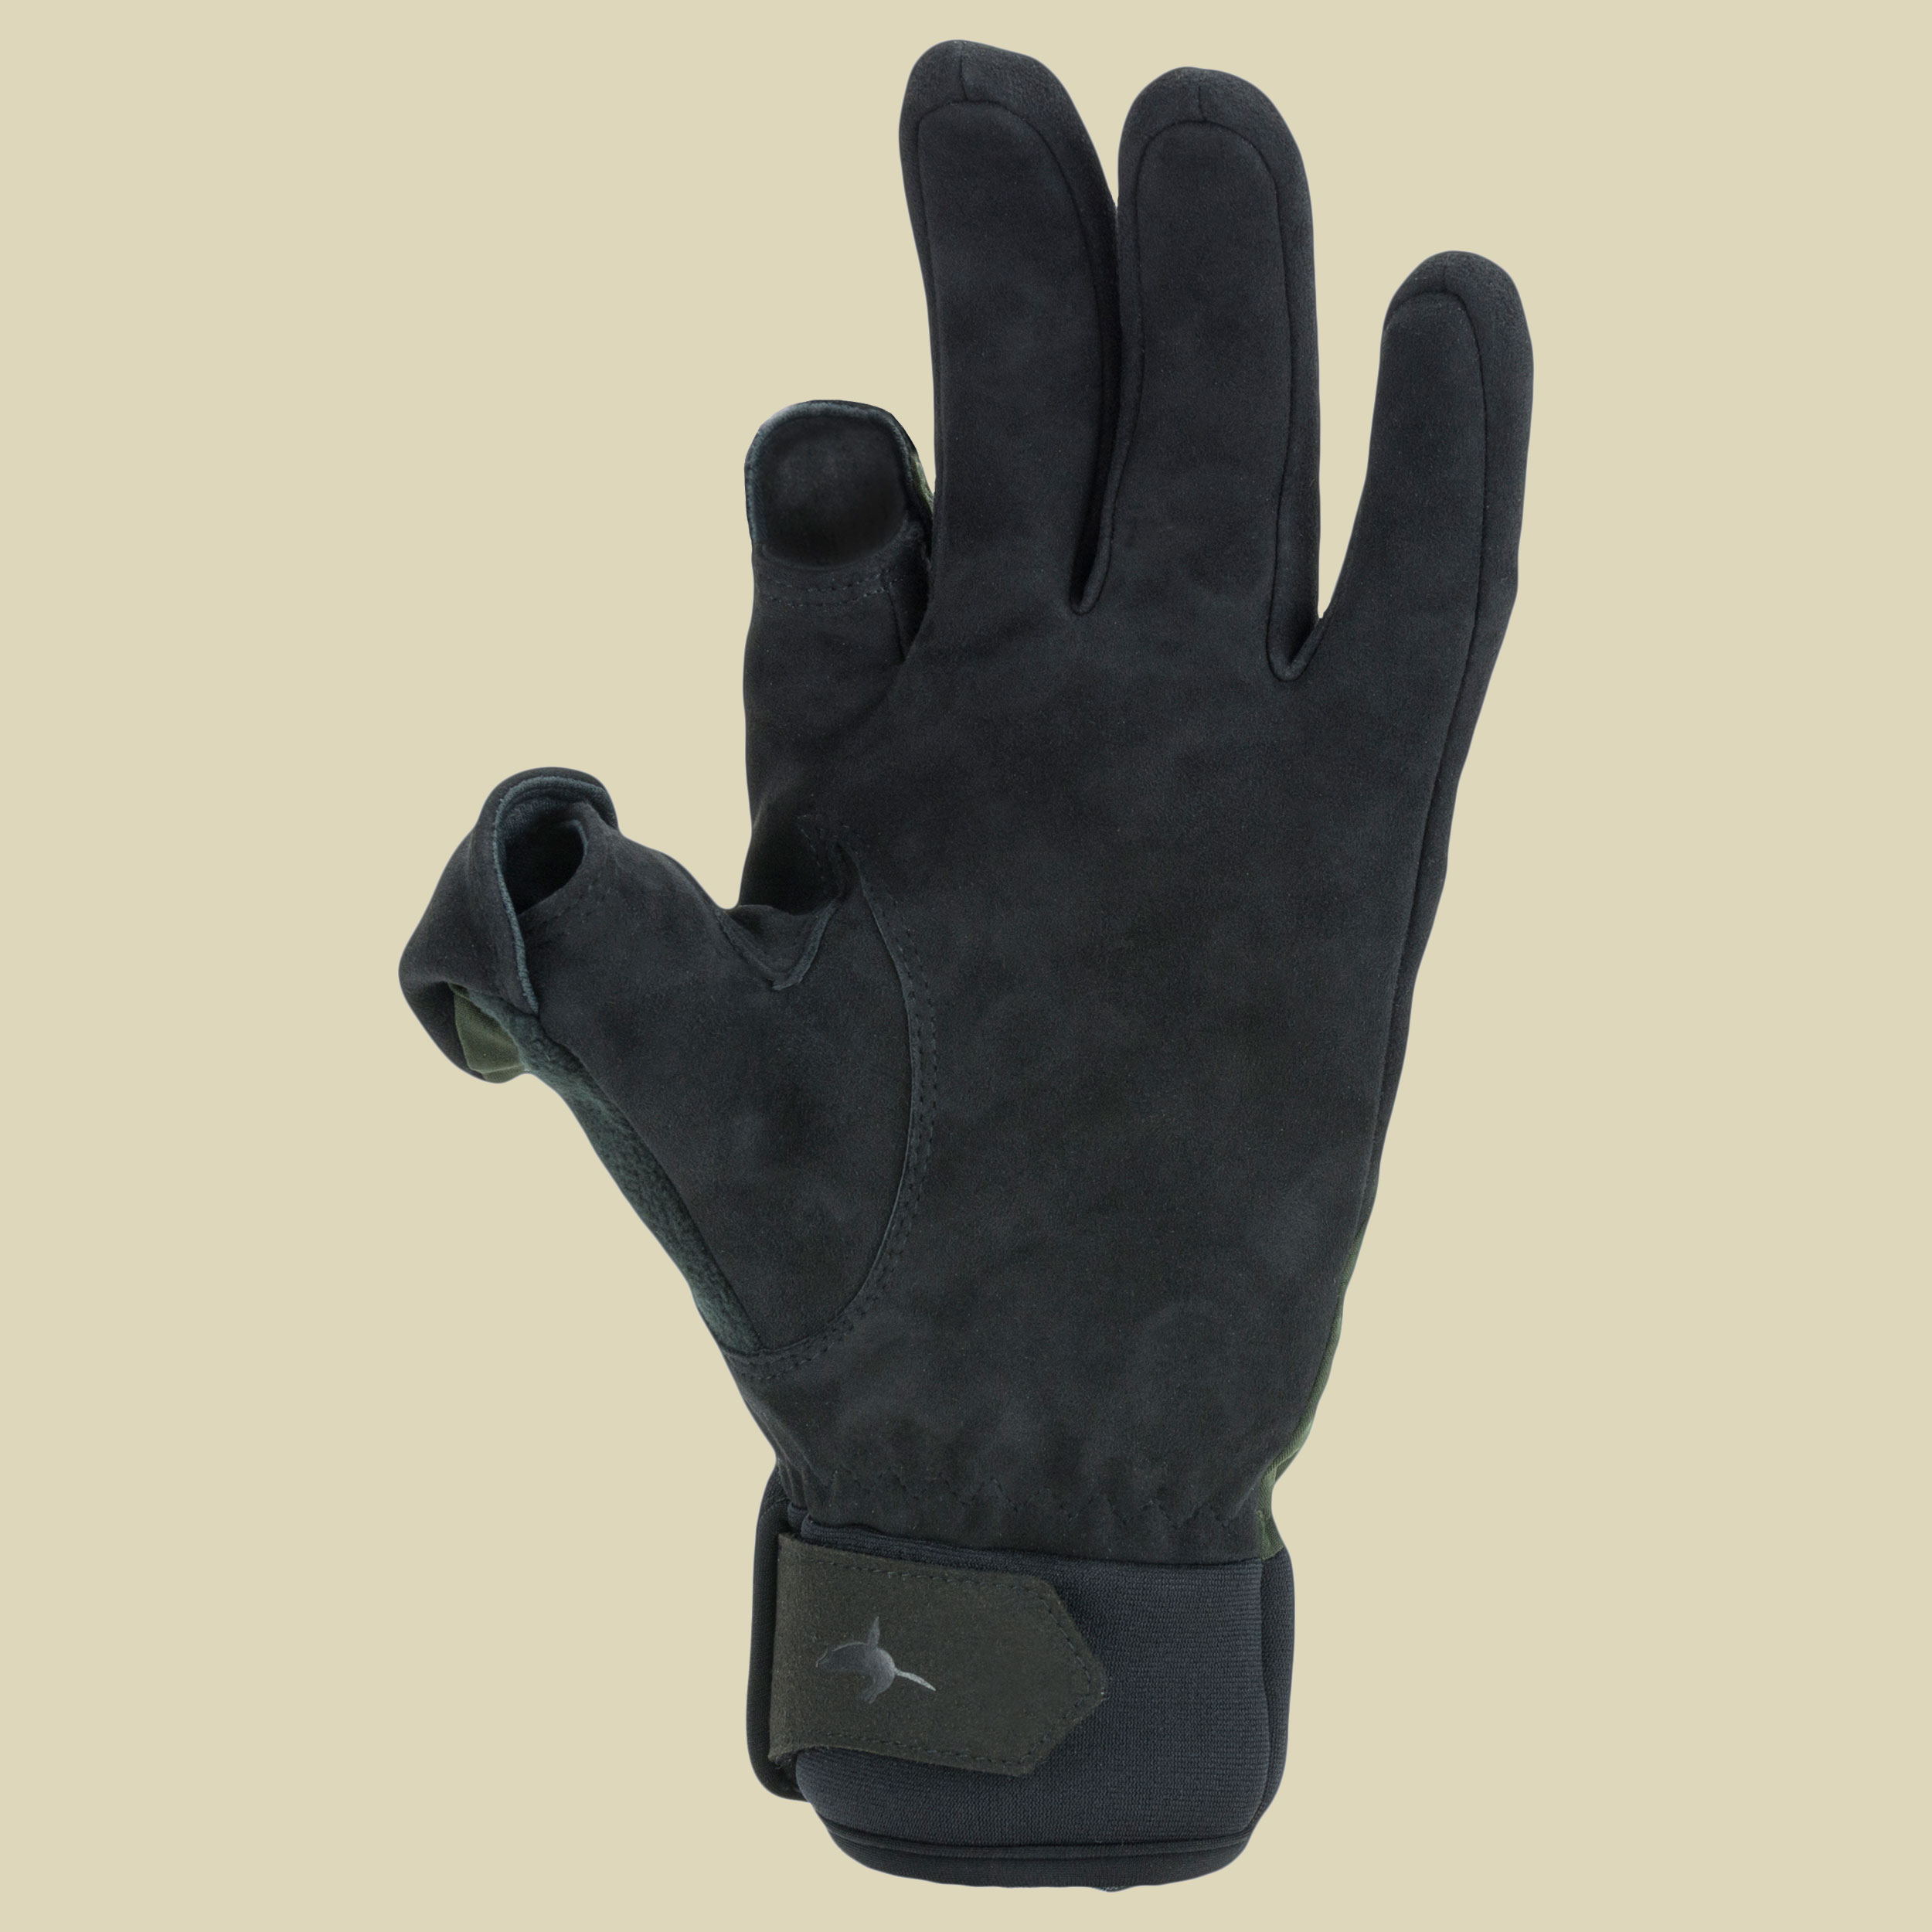 Waterproof All Weather Sporting Glove Größe XXL Farbe olive green/black